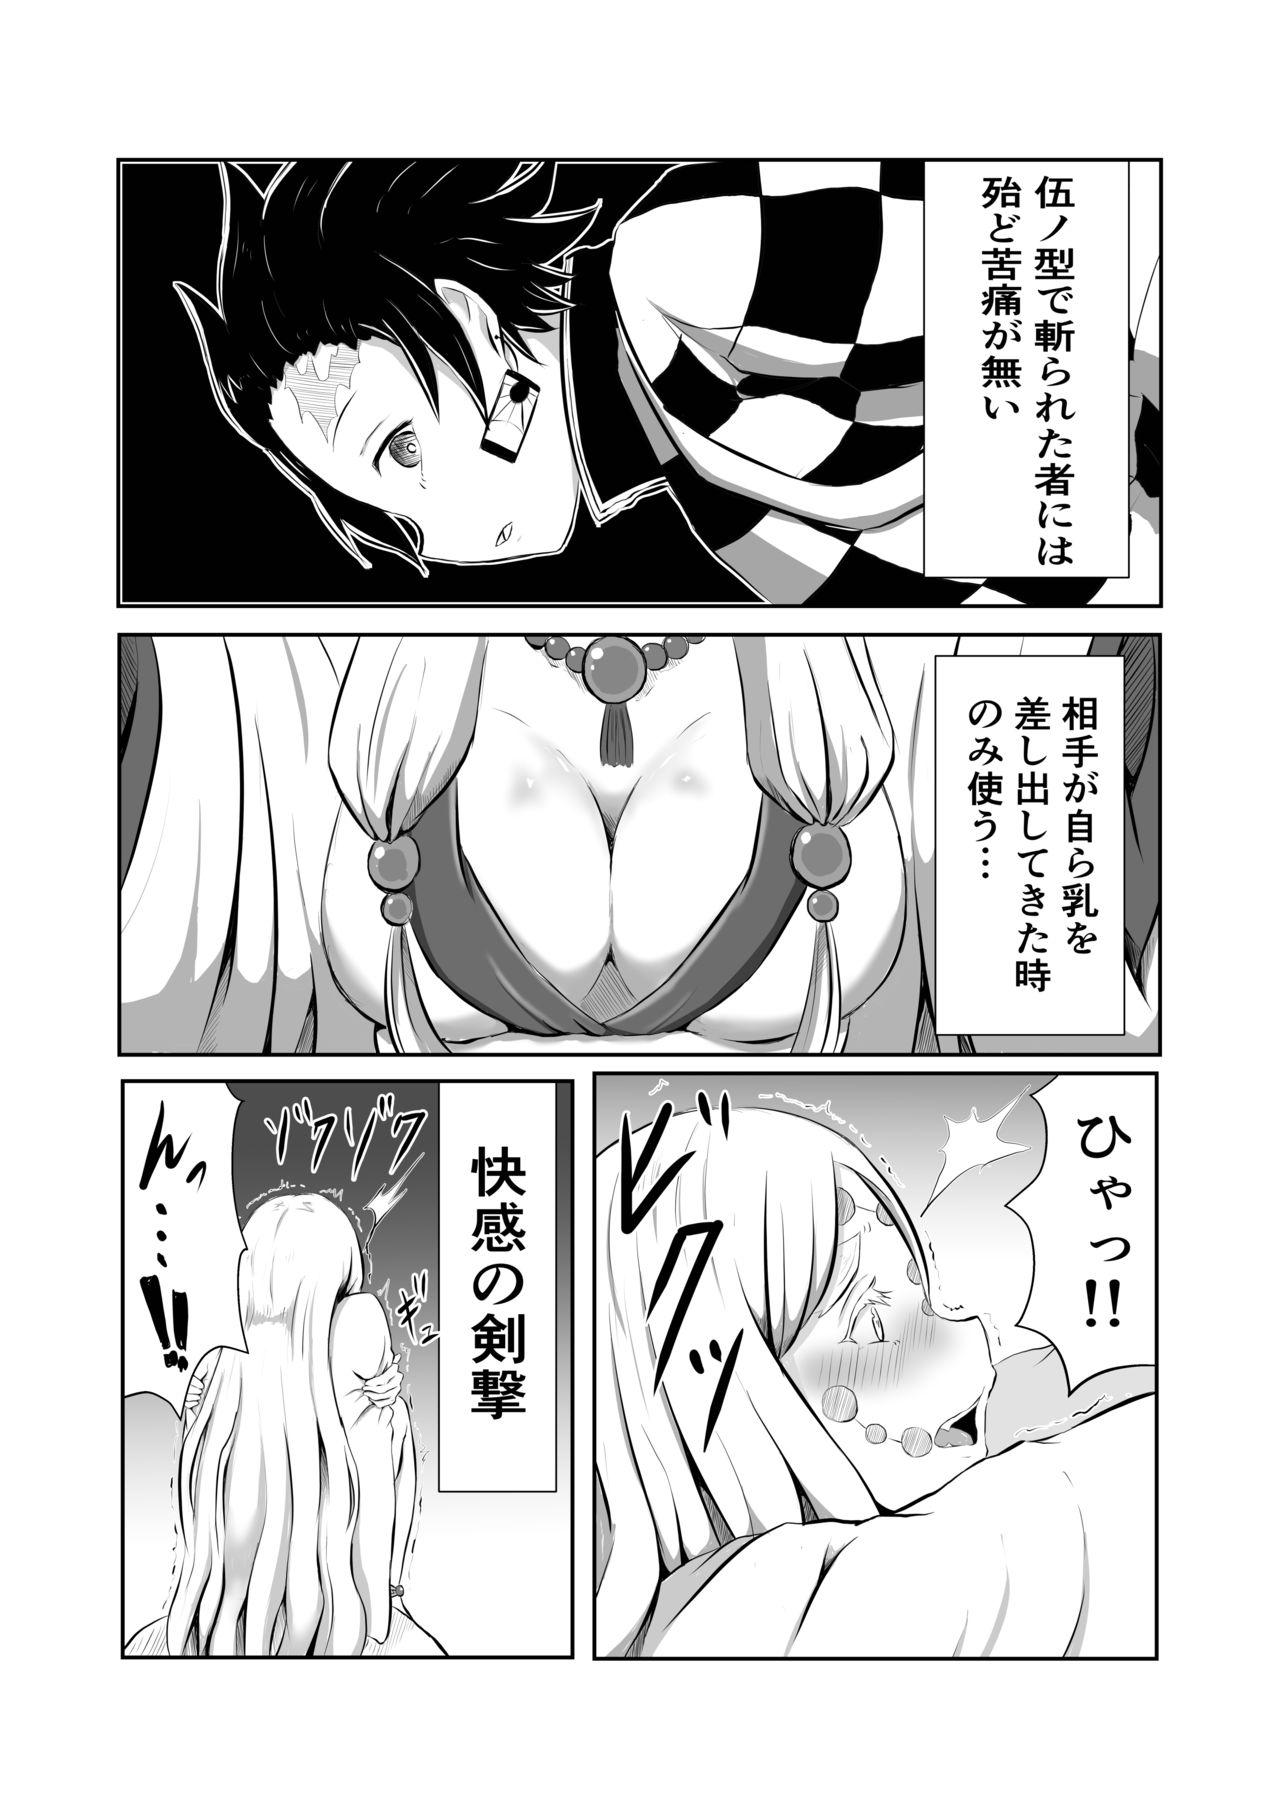 Her Hinokami Sex. - Kimetsu no yaiba | demon slayer Speculum - Page 4